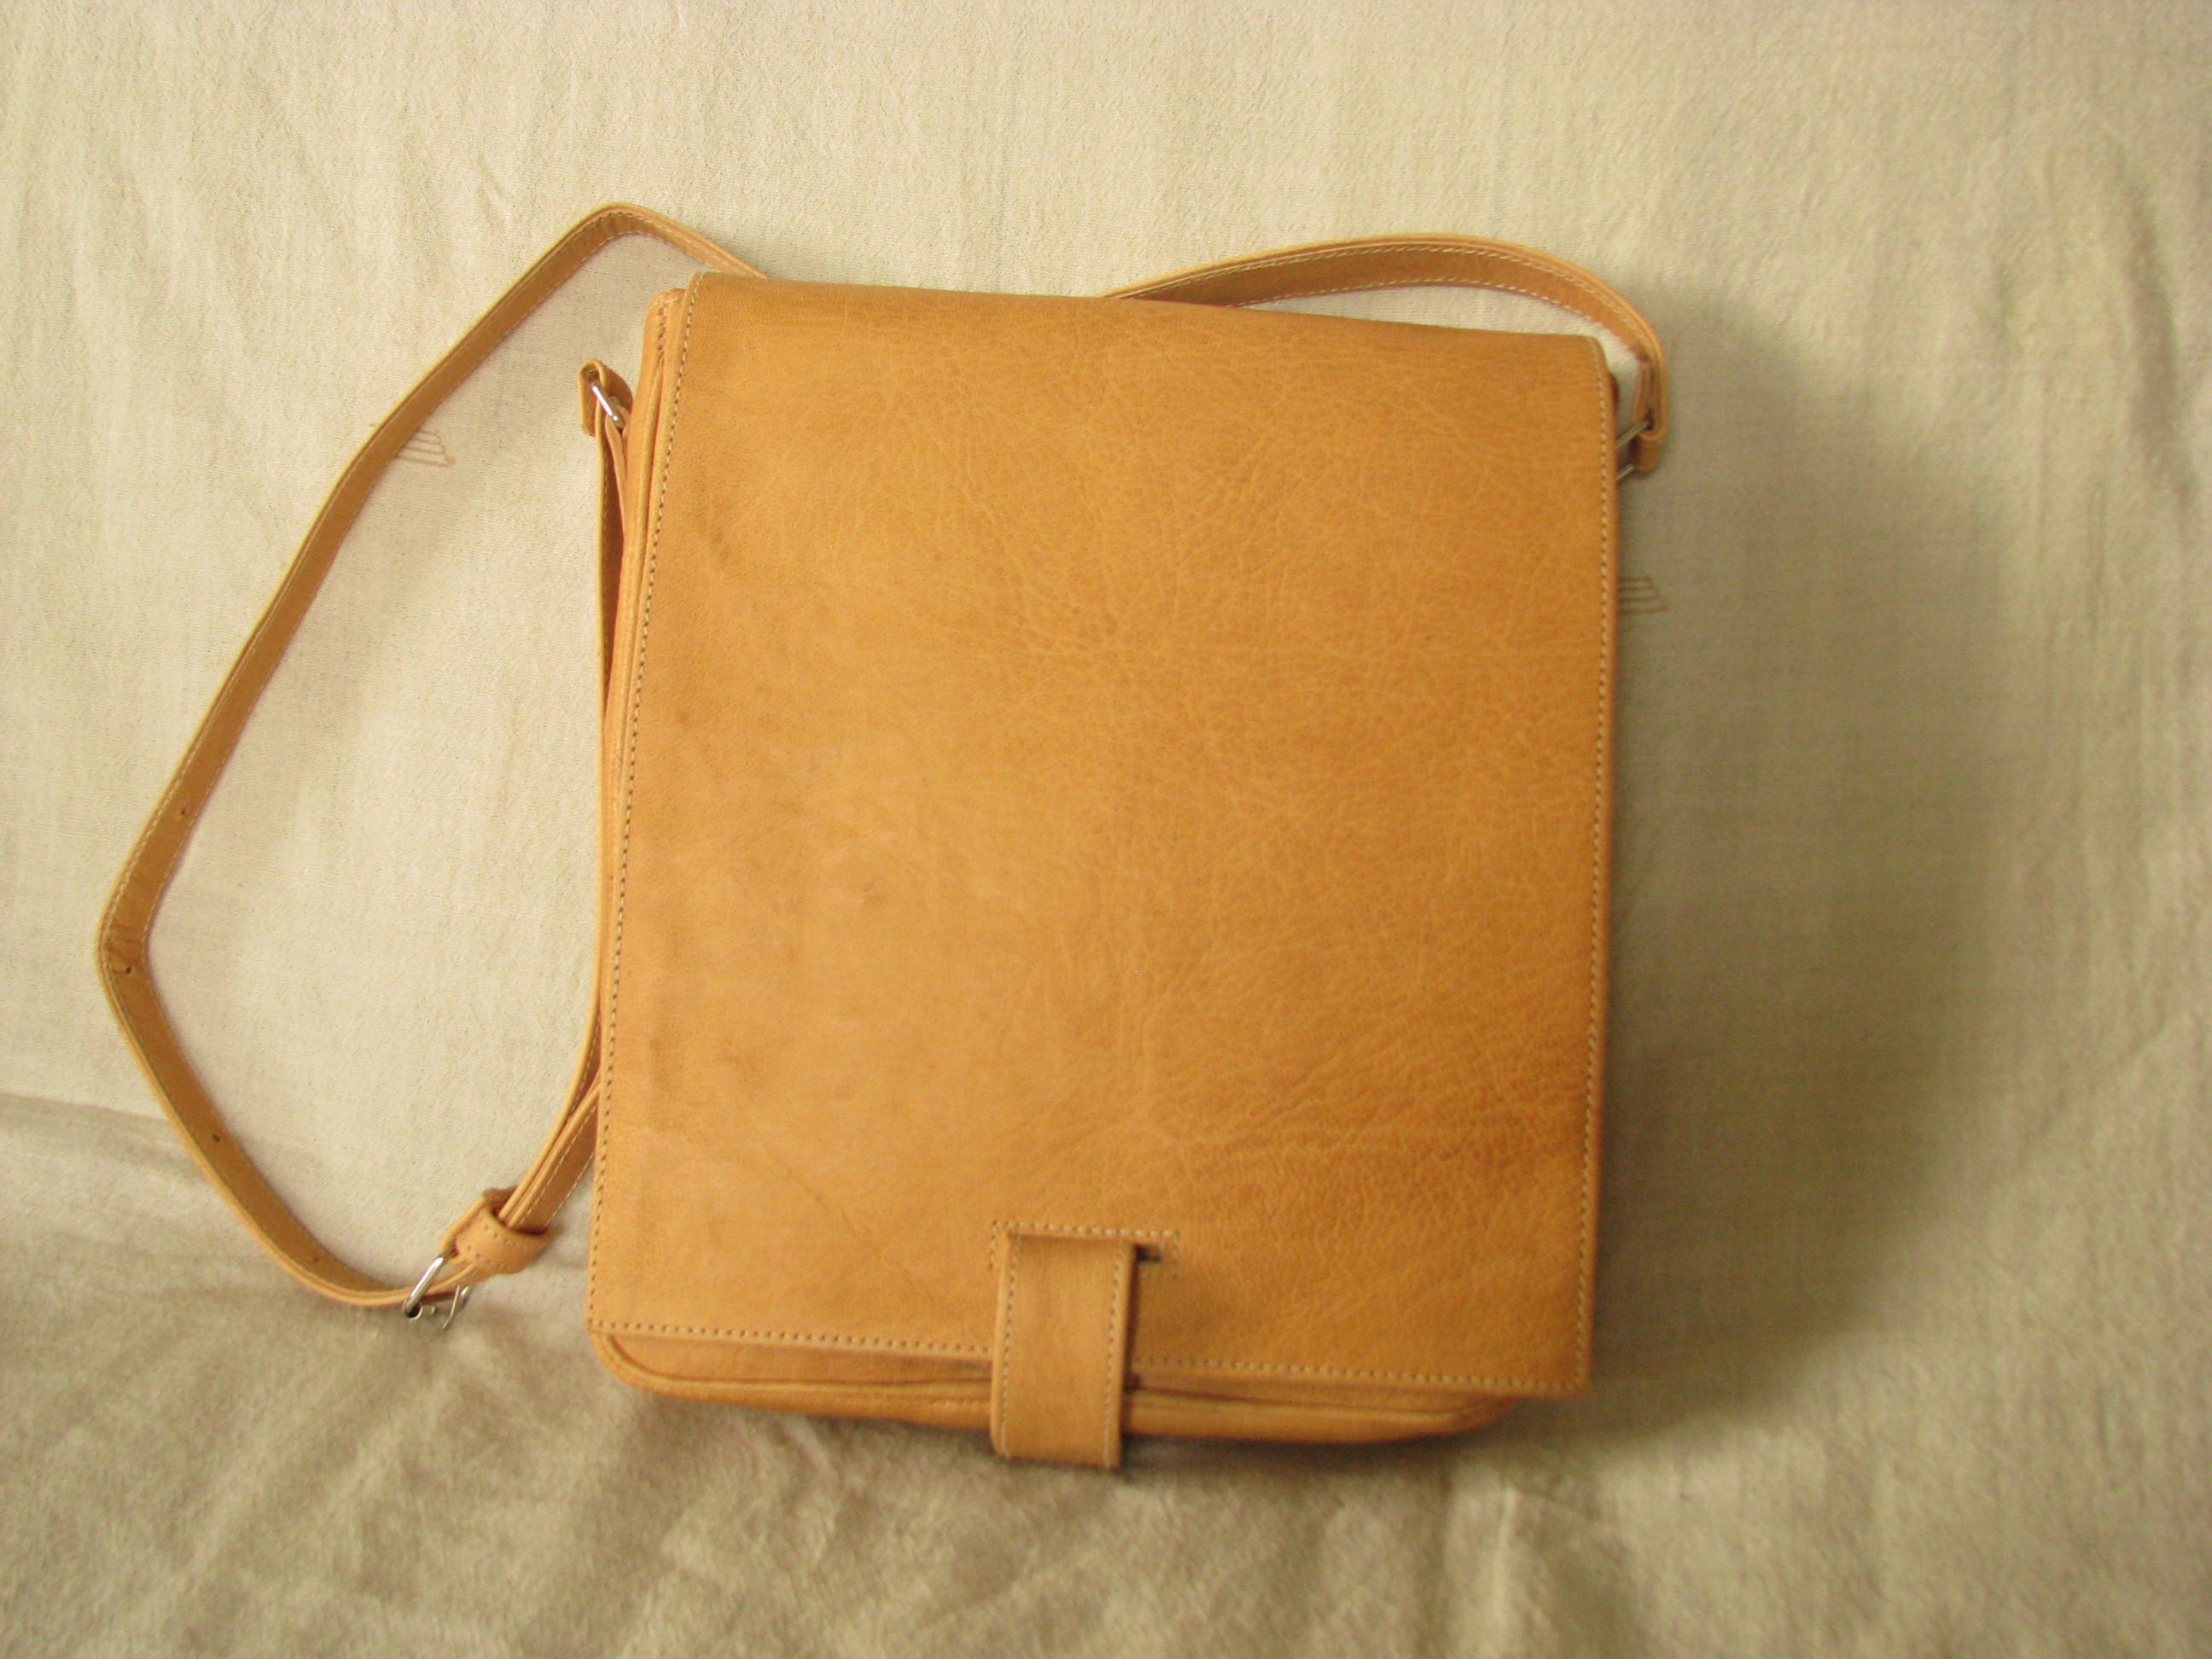 Gundara - messenger bag - genuine leather - unisex - from Afghanistan - fair trade